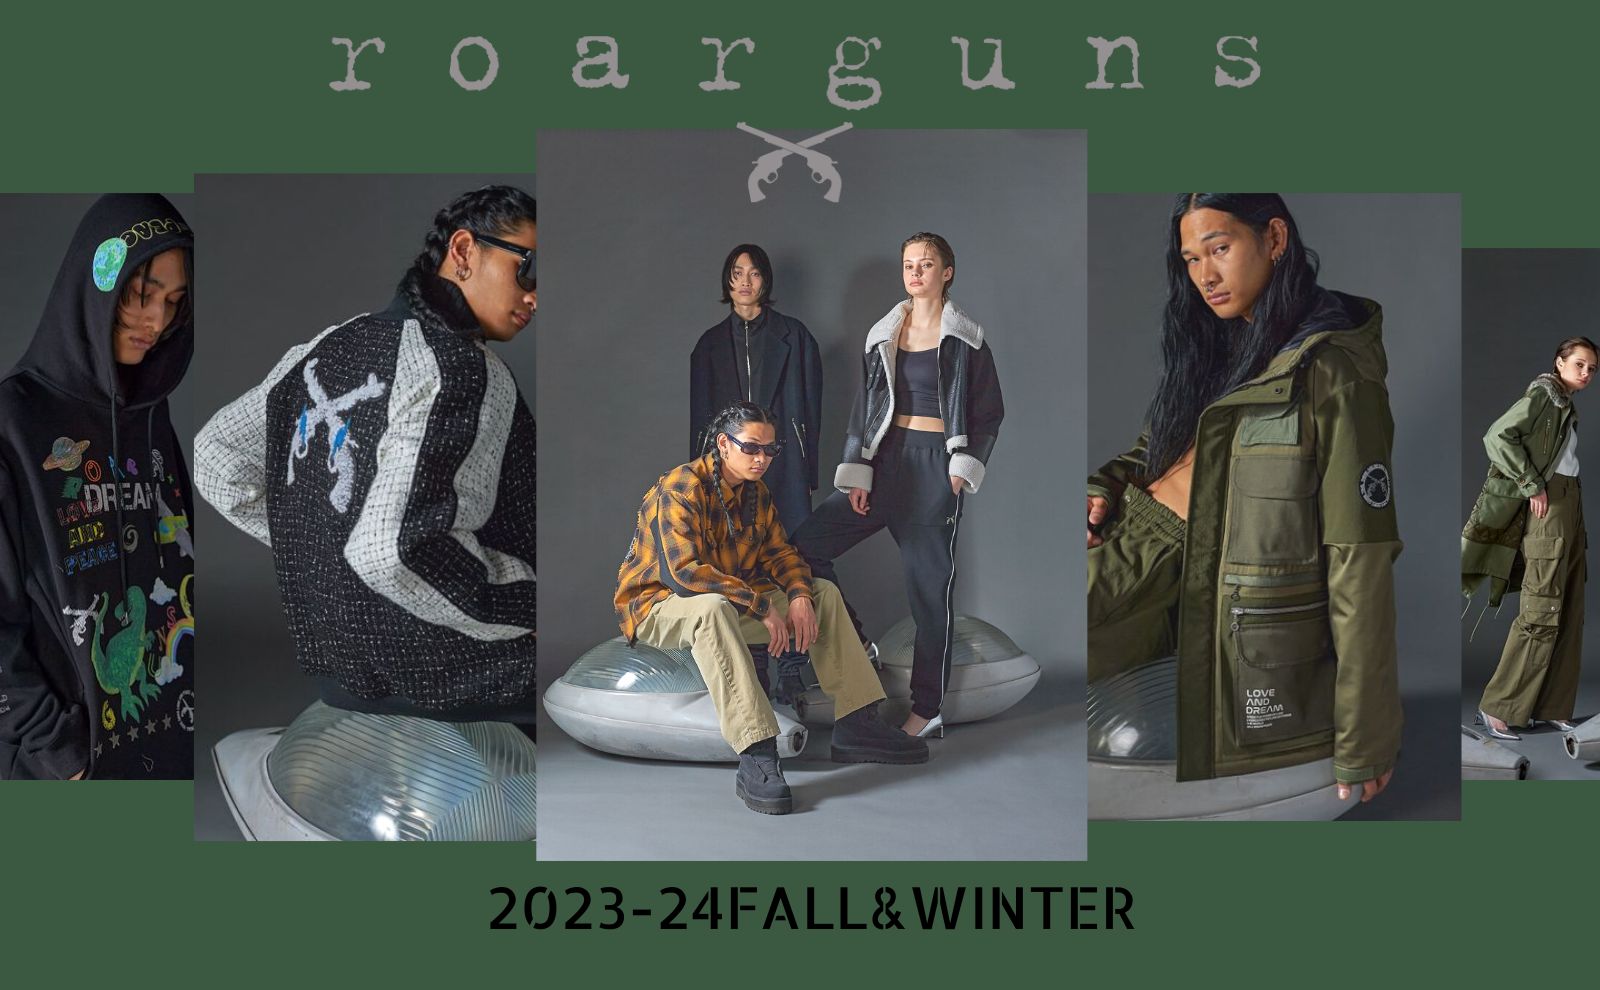 roarguns / ロアーガンズ 公式通販 ロアー| BRYAN